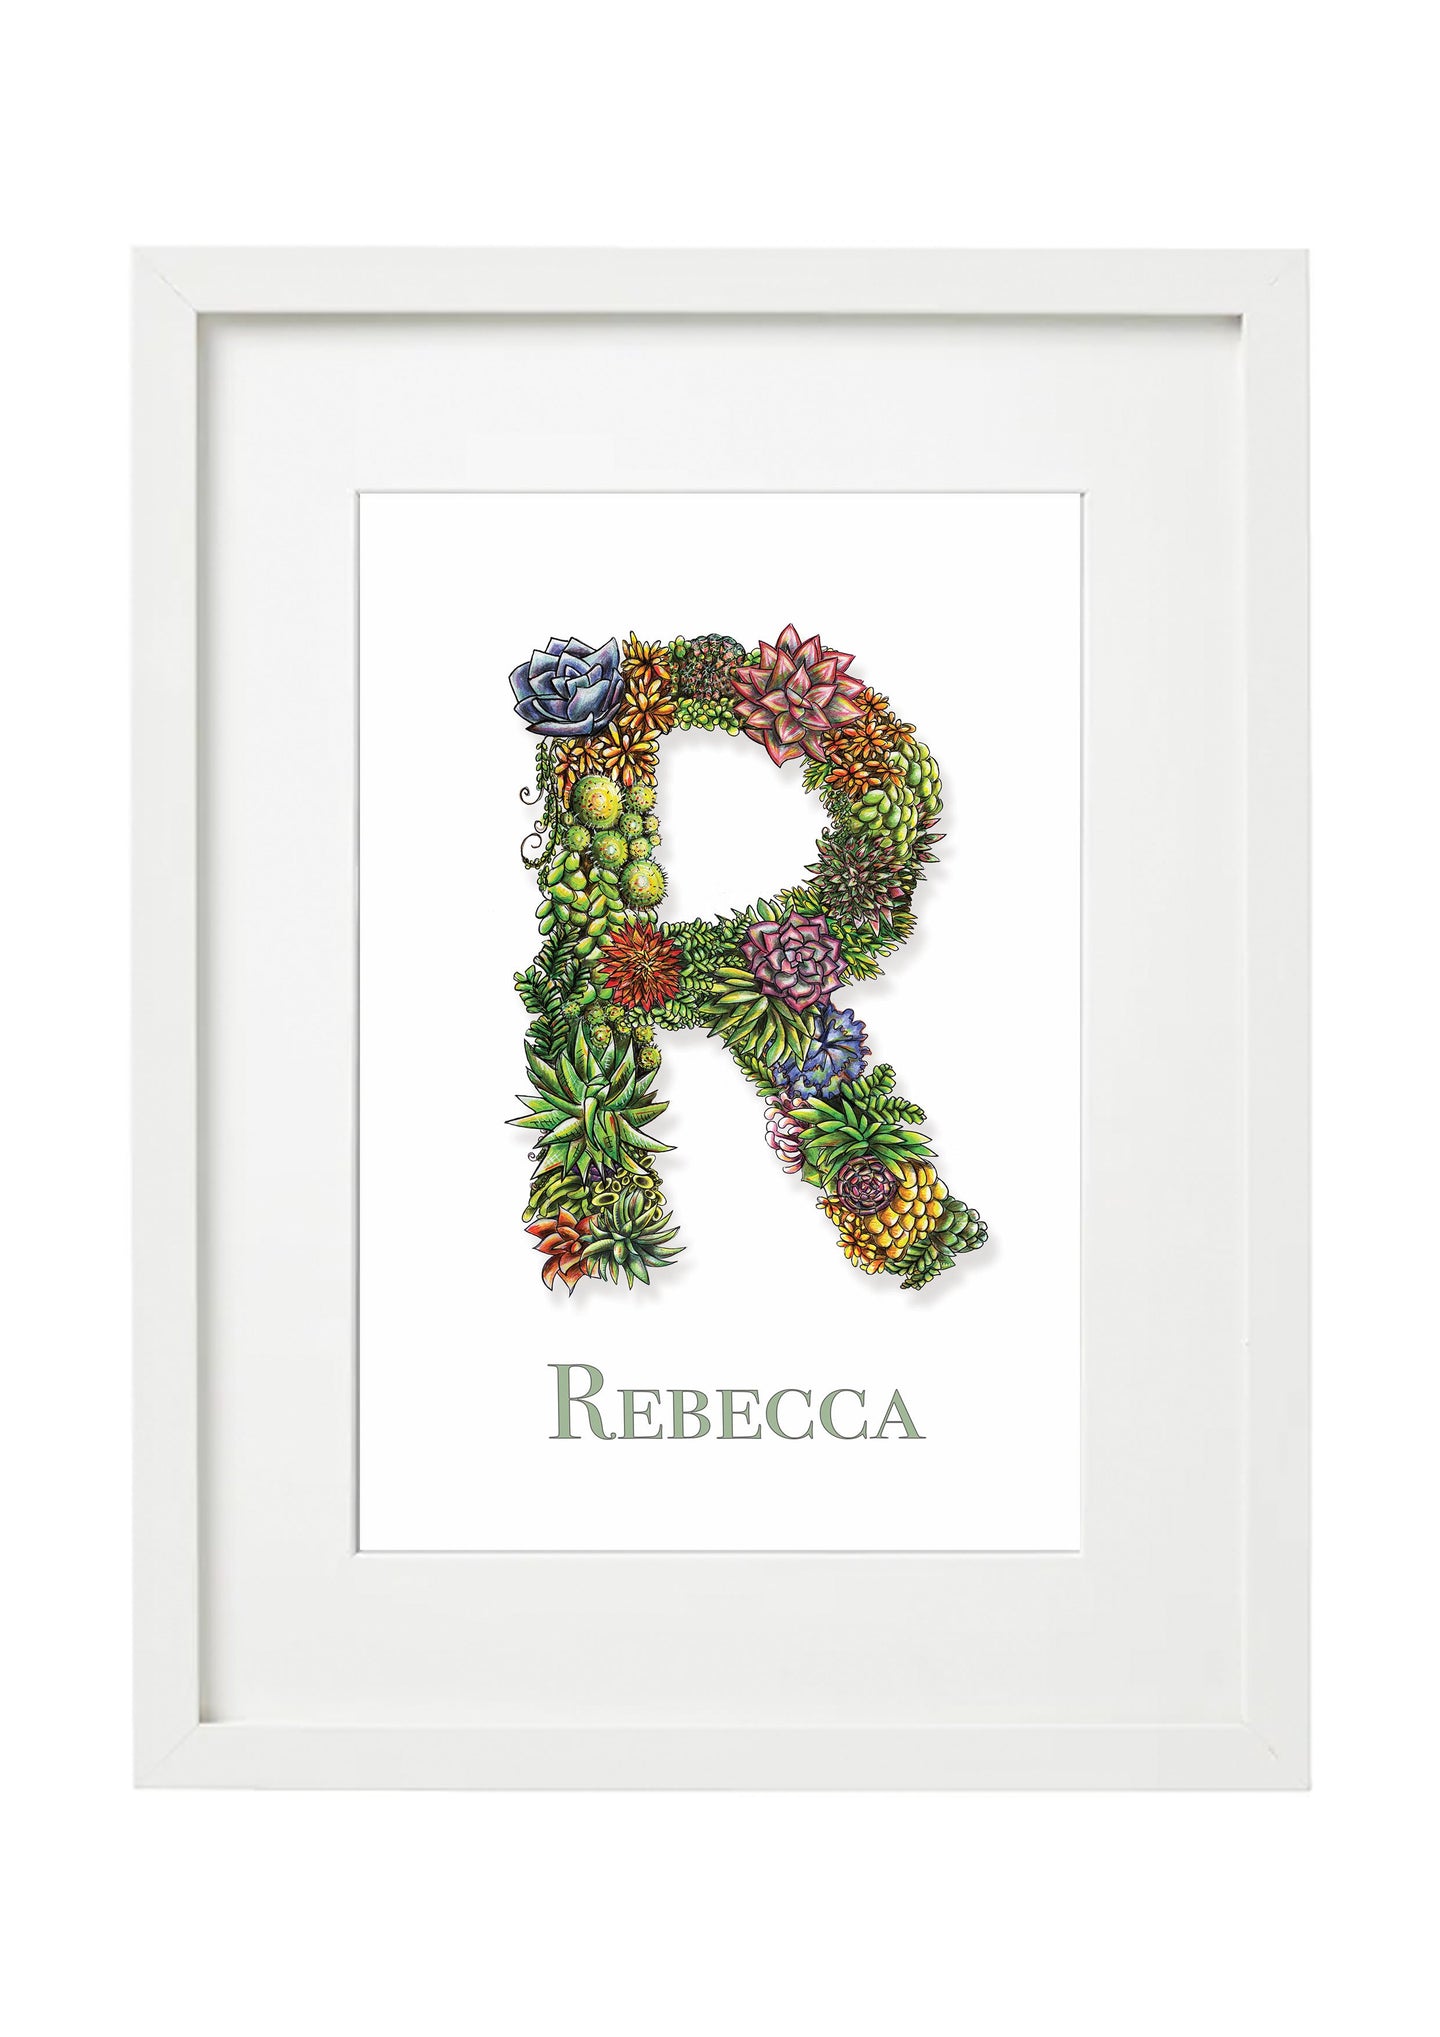 'R' Alphabet Print Lucy Hughes Creations 